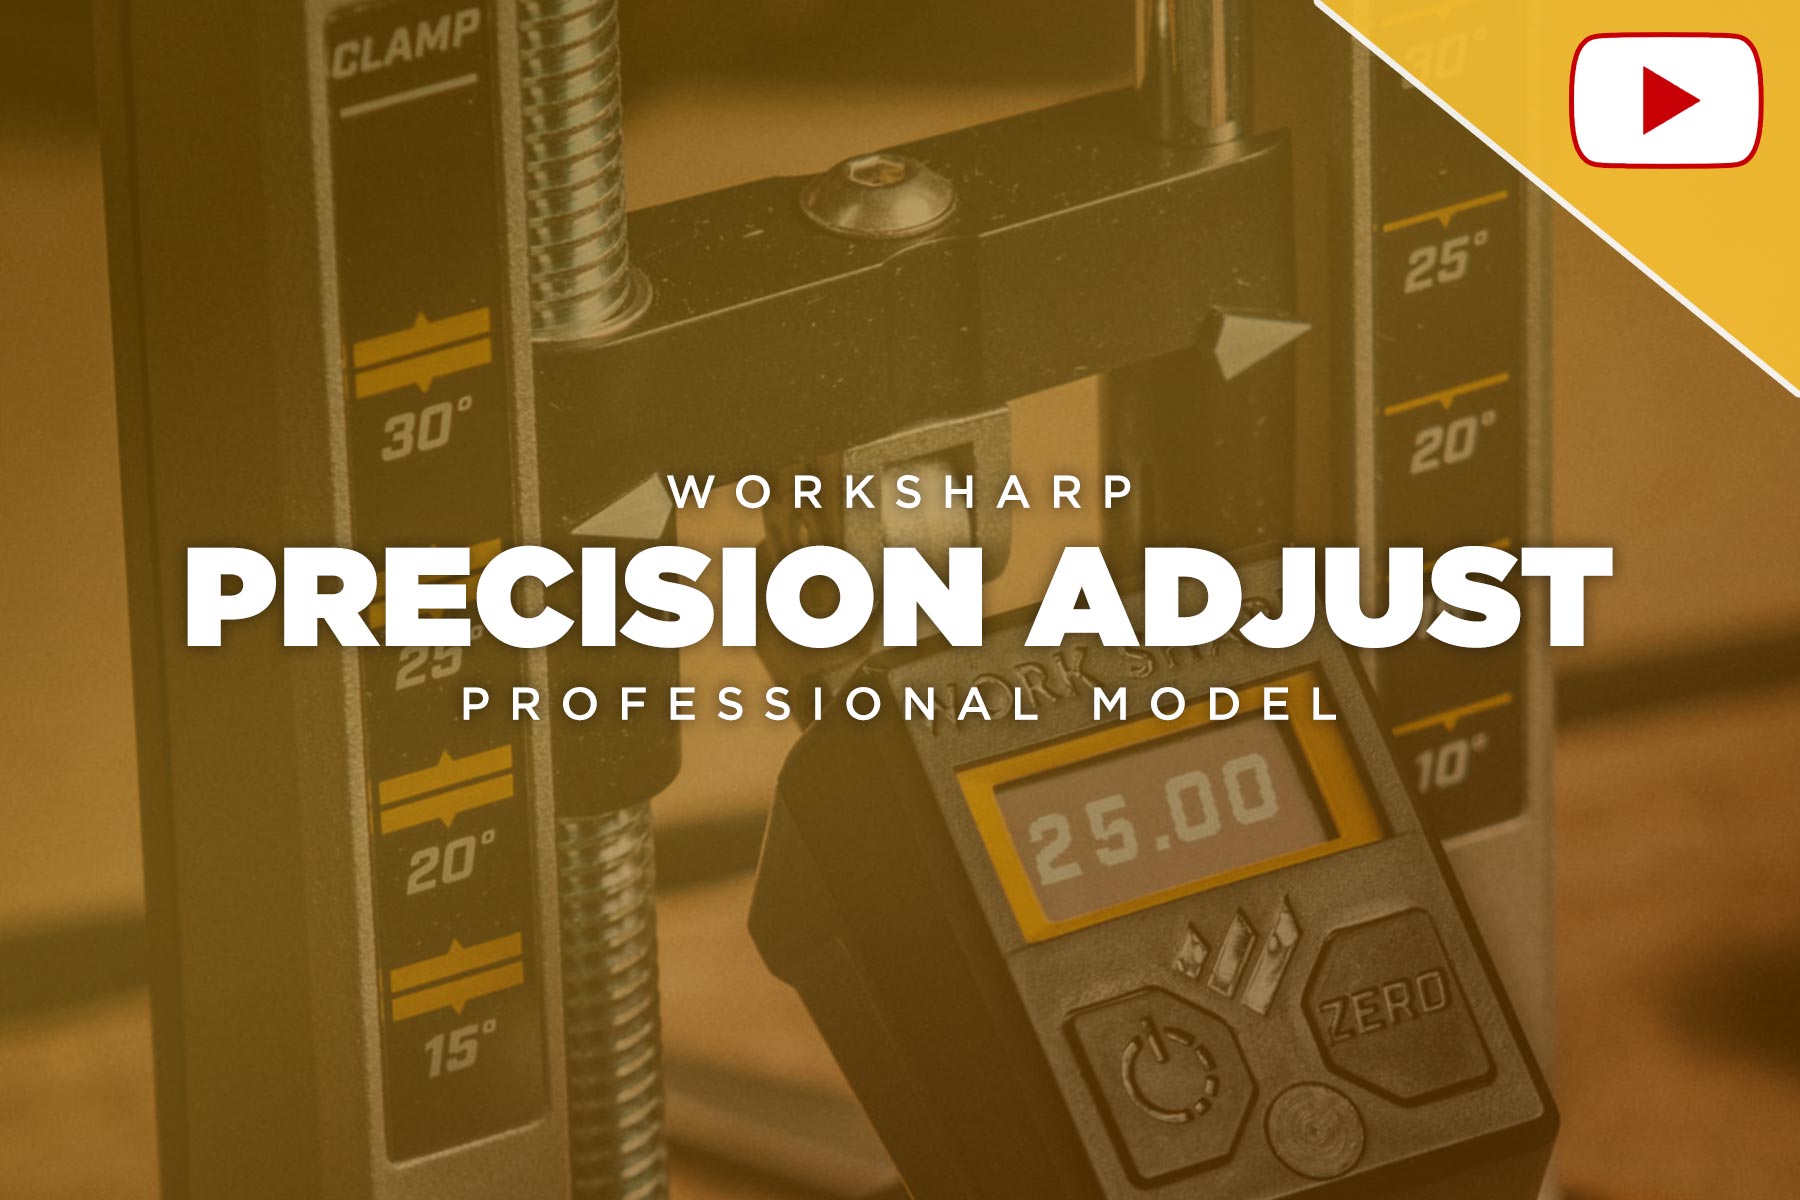 Work Sharp Professional Precision Adjust Review